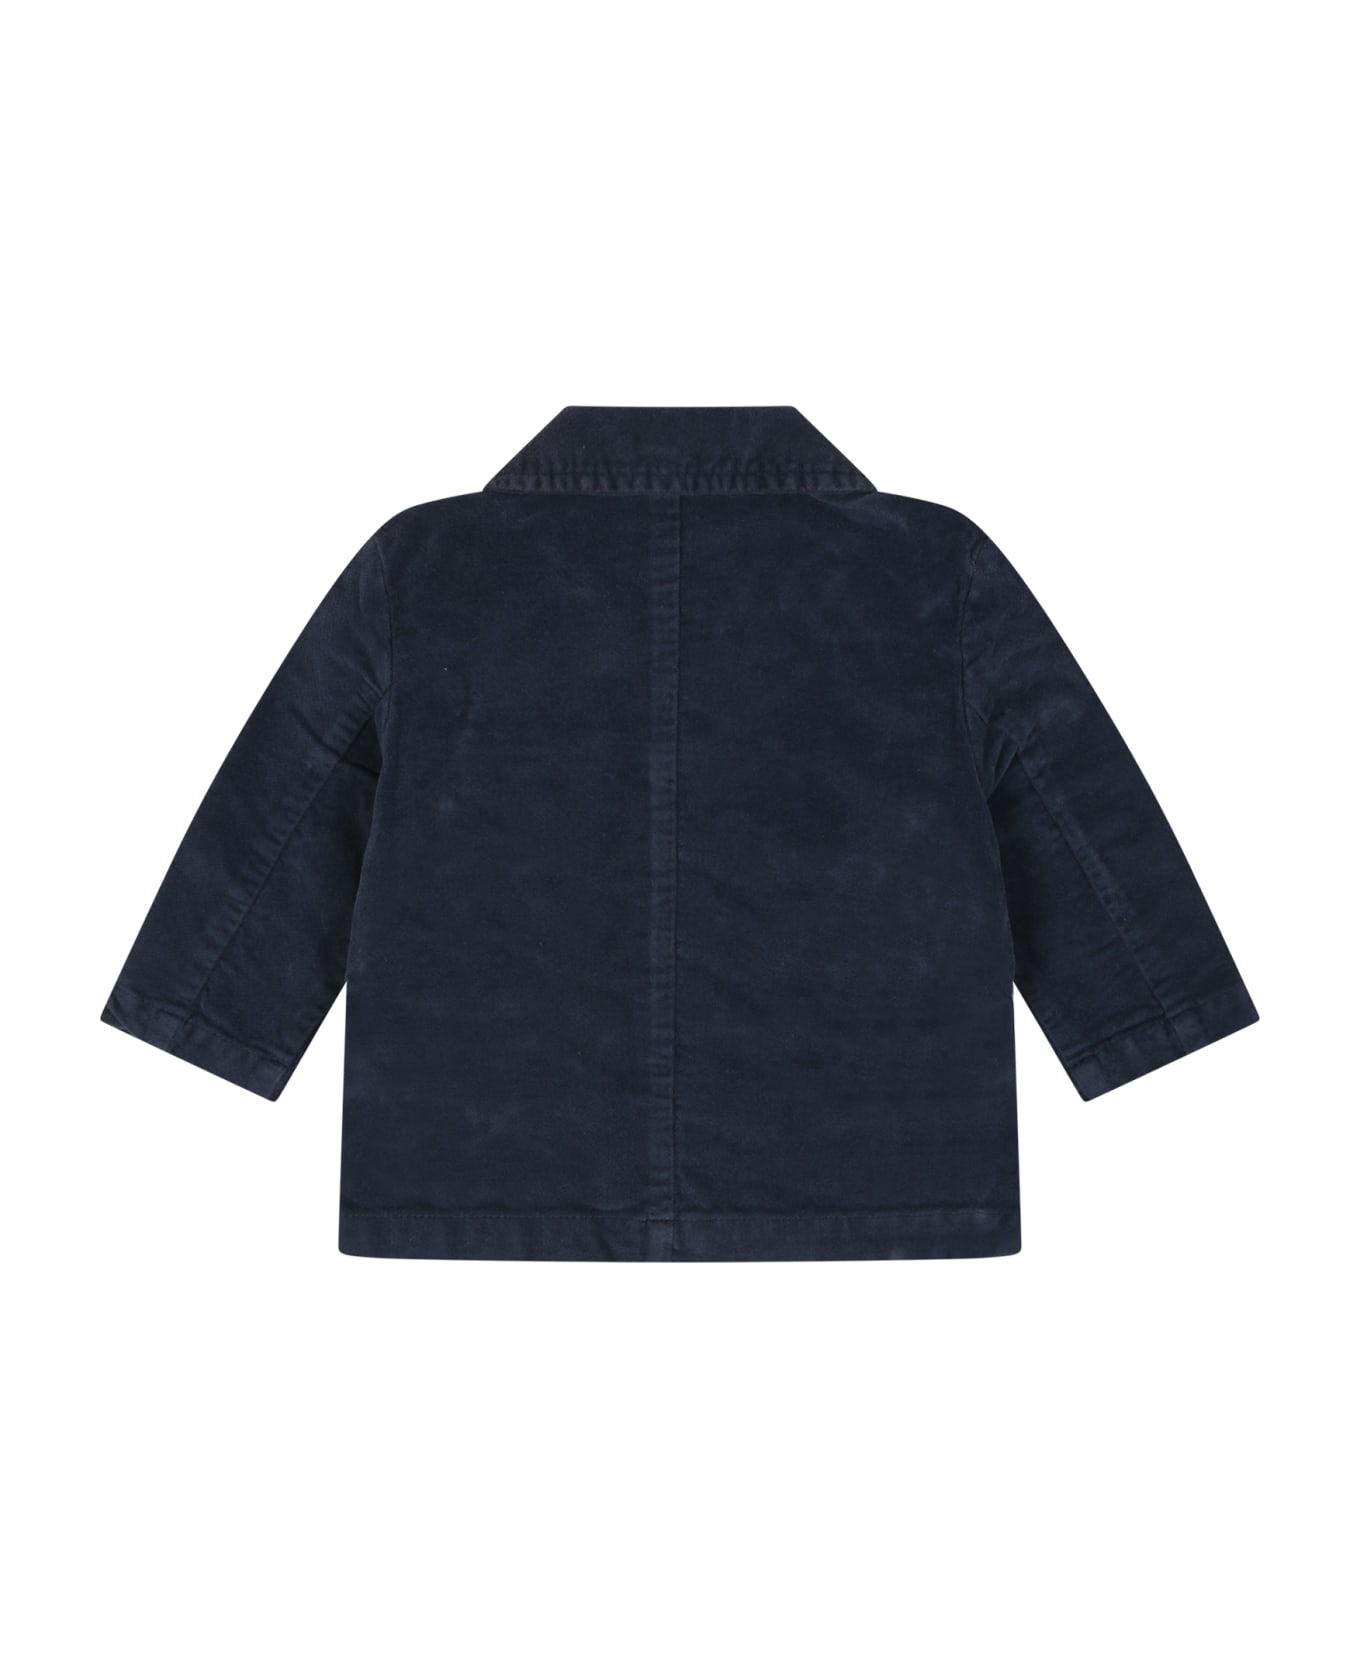 Zhoe & Tobiah Blue Jacket For Baby Boy - Blue